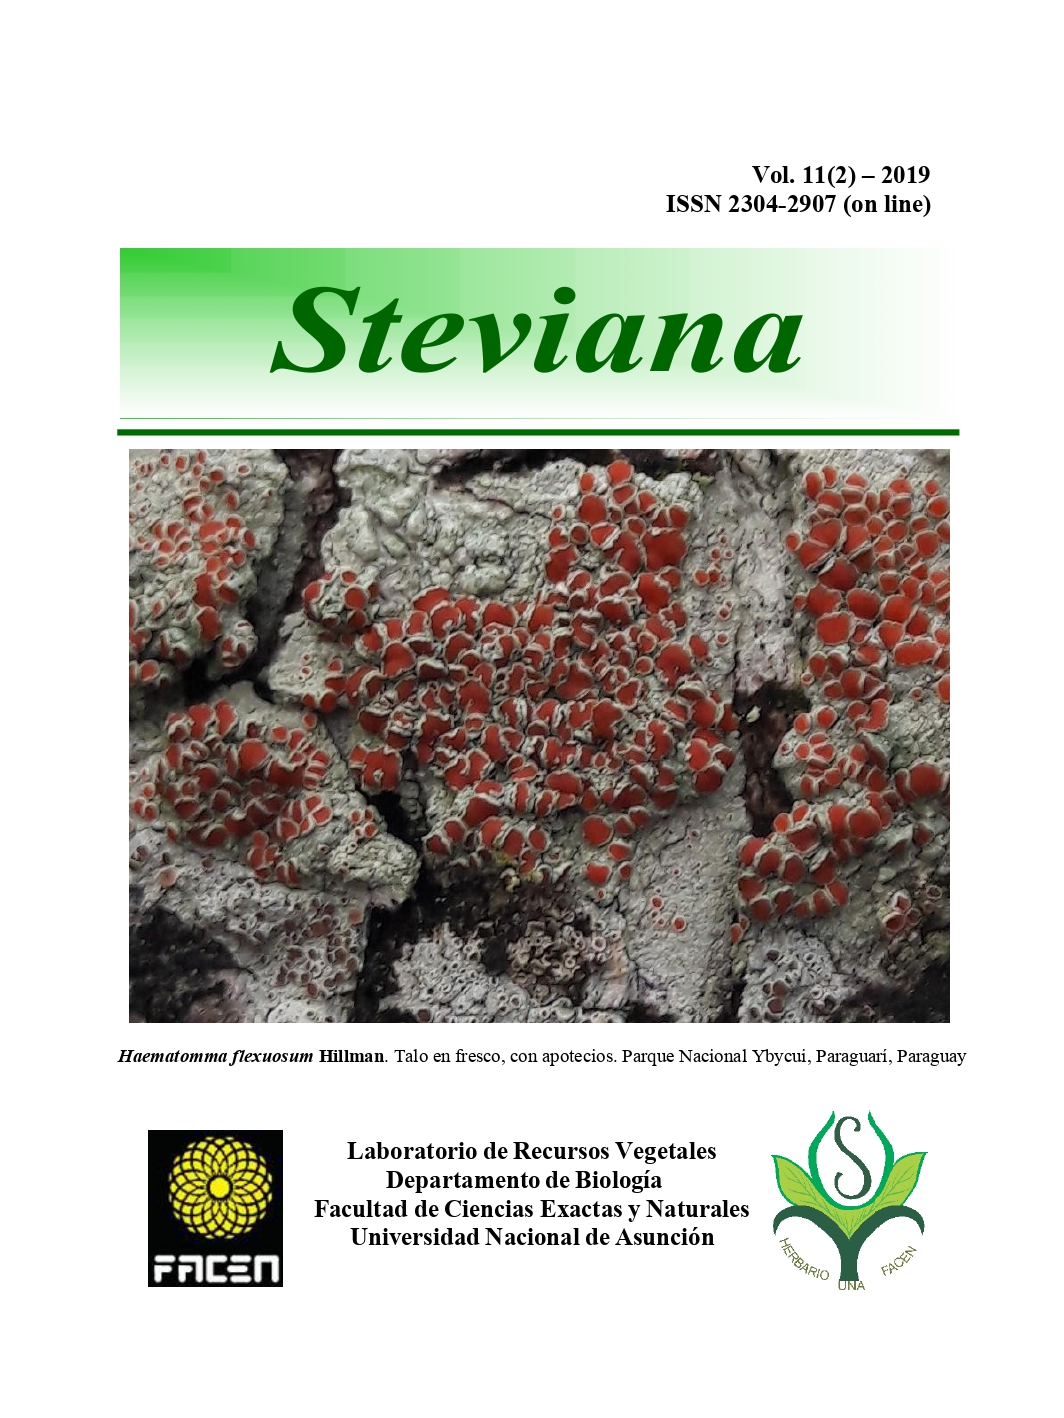 					Ver Vol. 11 Núm. 2 (2019): Steviana
				